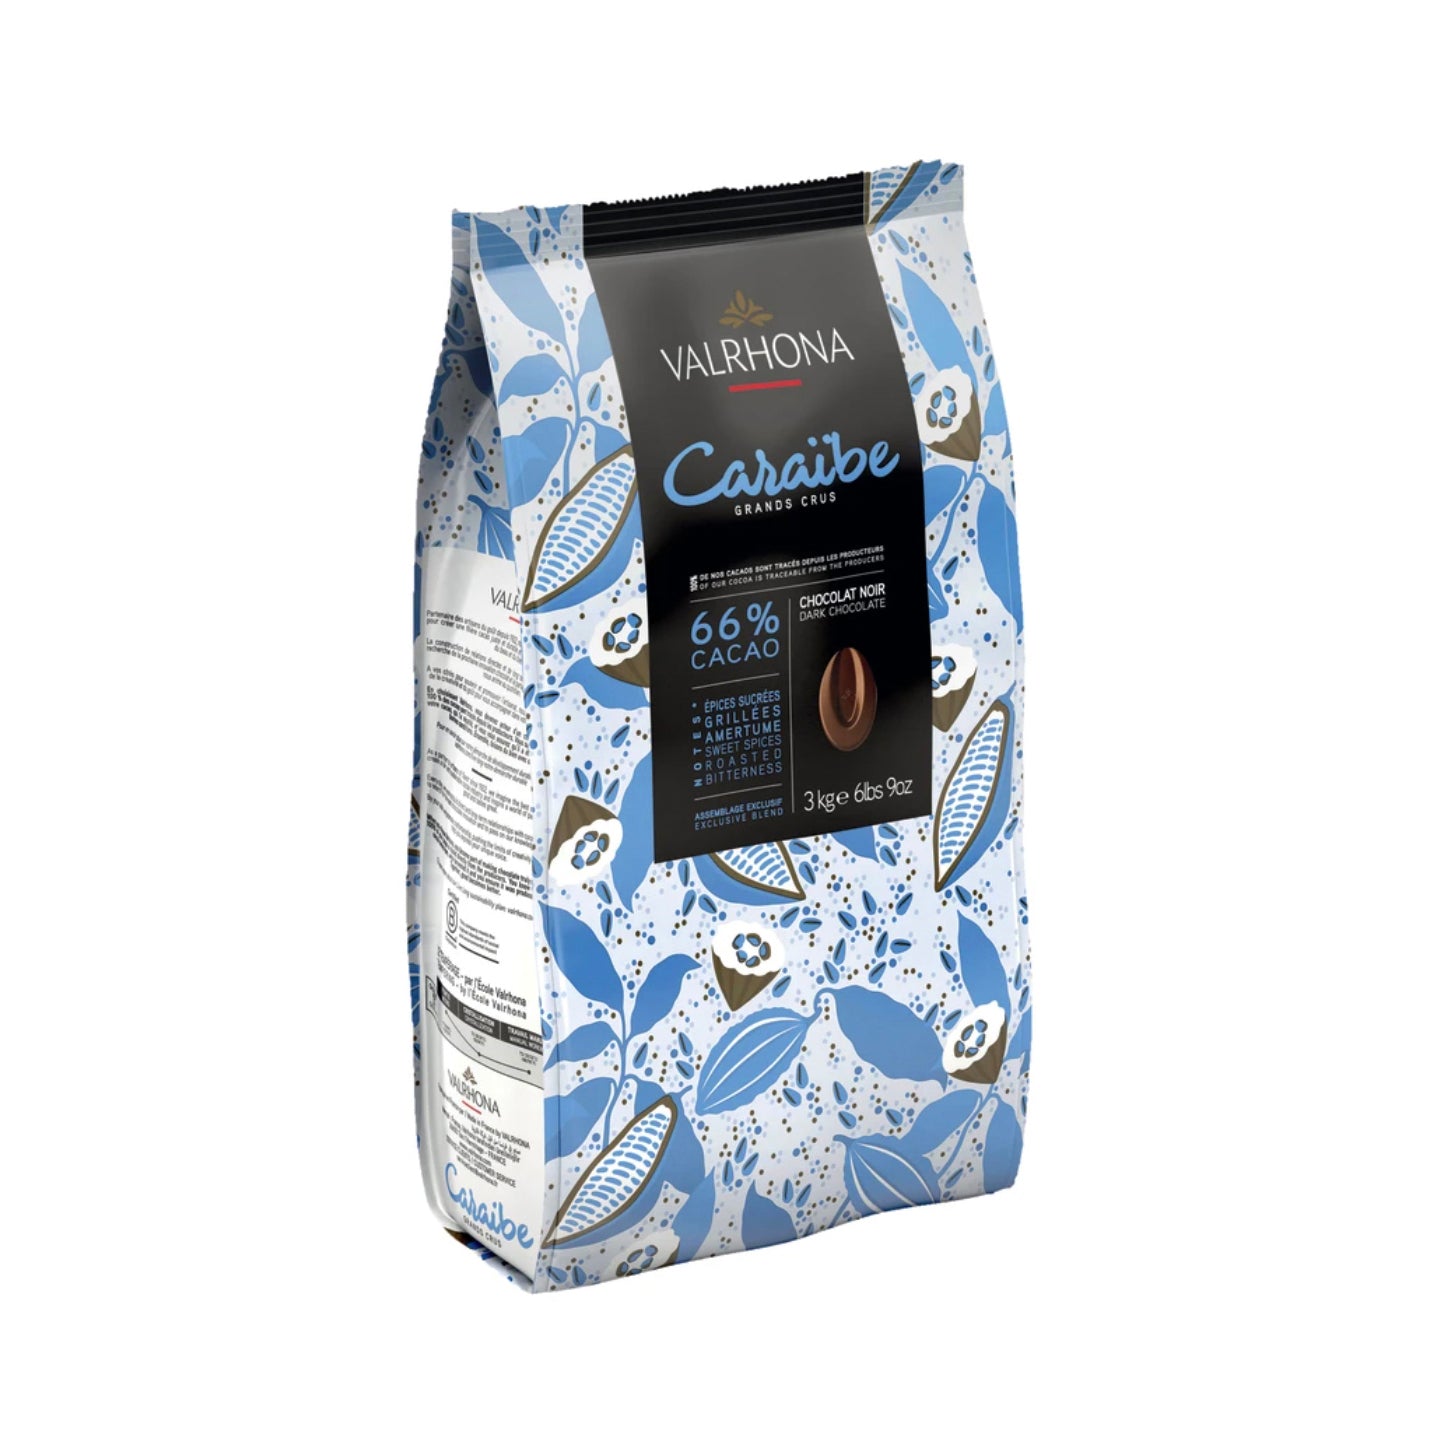 VALRHONA Caraibe 66%, Dark Chocolate Couverture